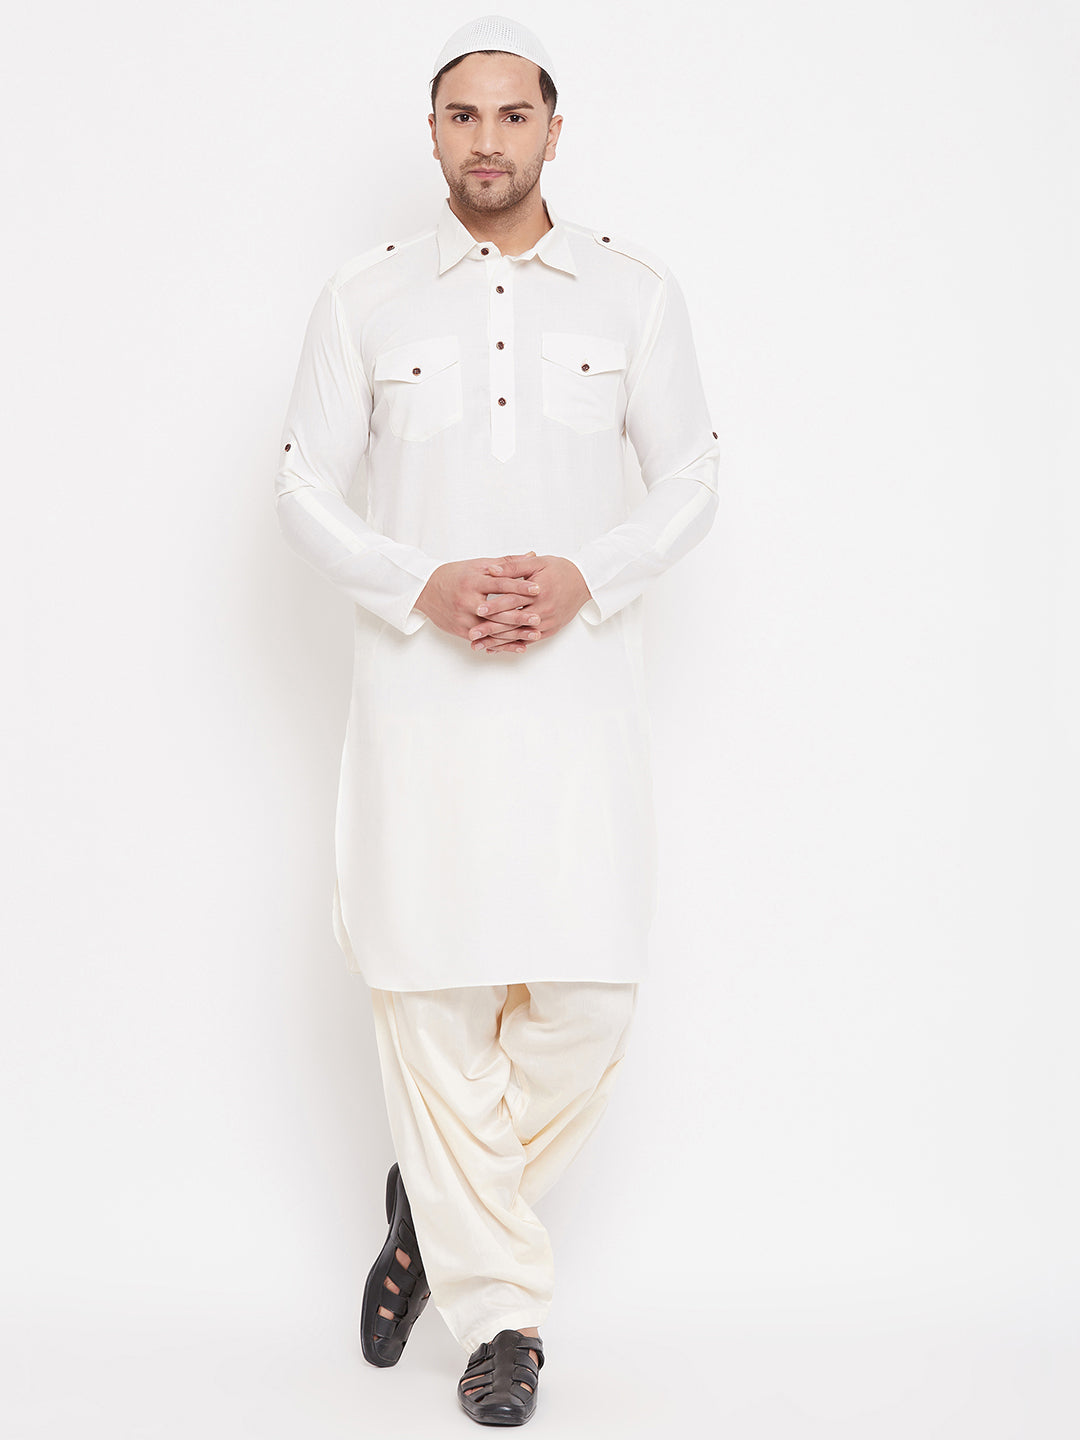 Cotton Black Mens Designer Pathani Suit, Size: 36 - 46 at Rs 795/piece in  Surat